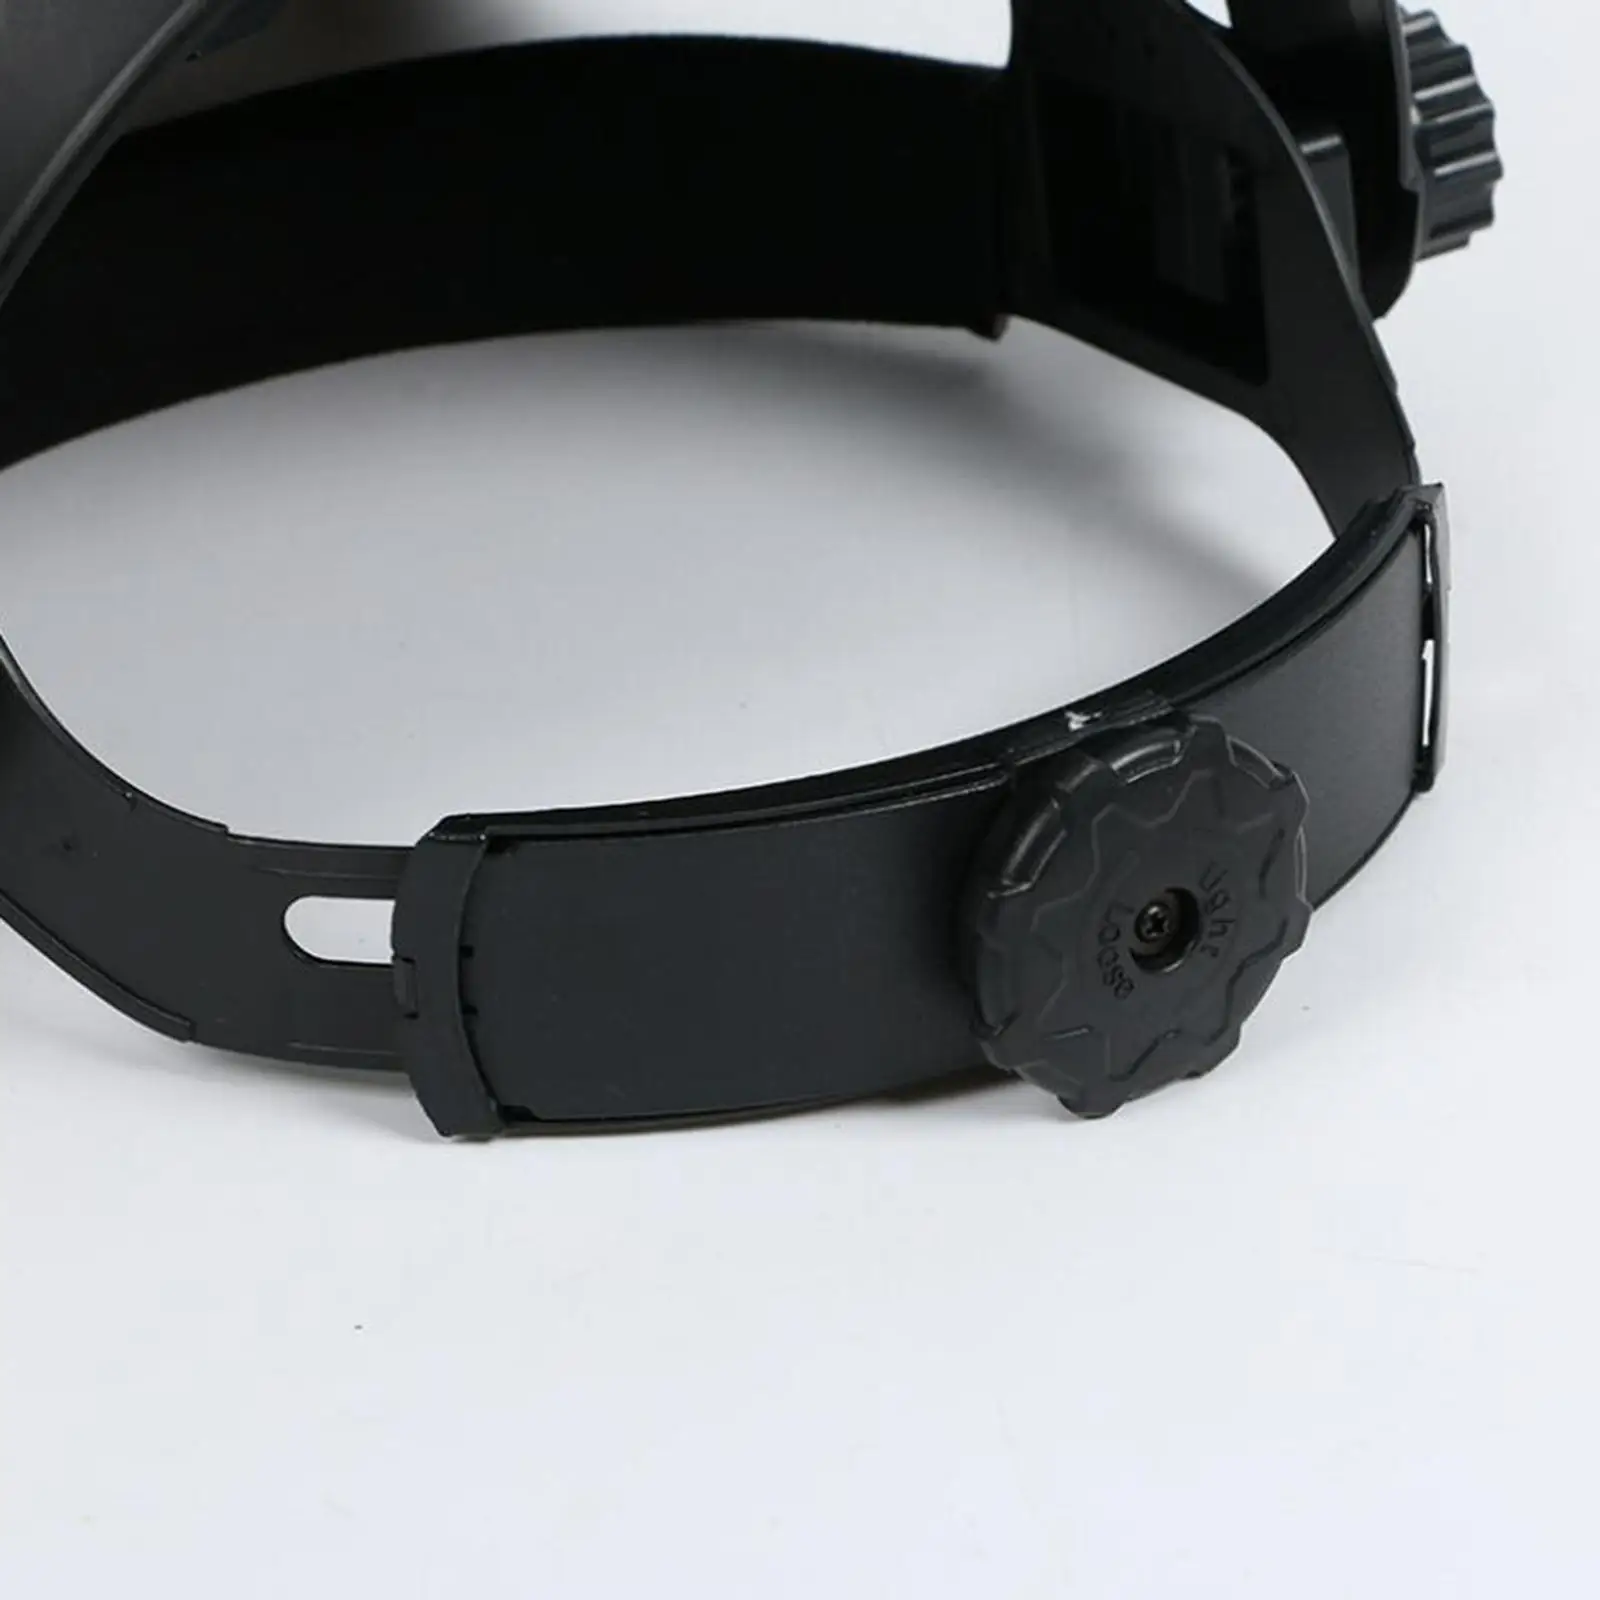 1x Mask Solar Power Wide Shade Size Adjust Auto Darkening Adjustable Large Viewing Welding Helmet Welder Glasses for TIG Mig ARC